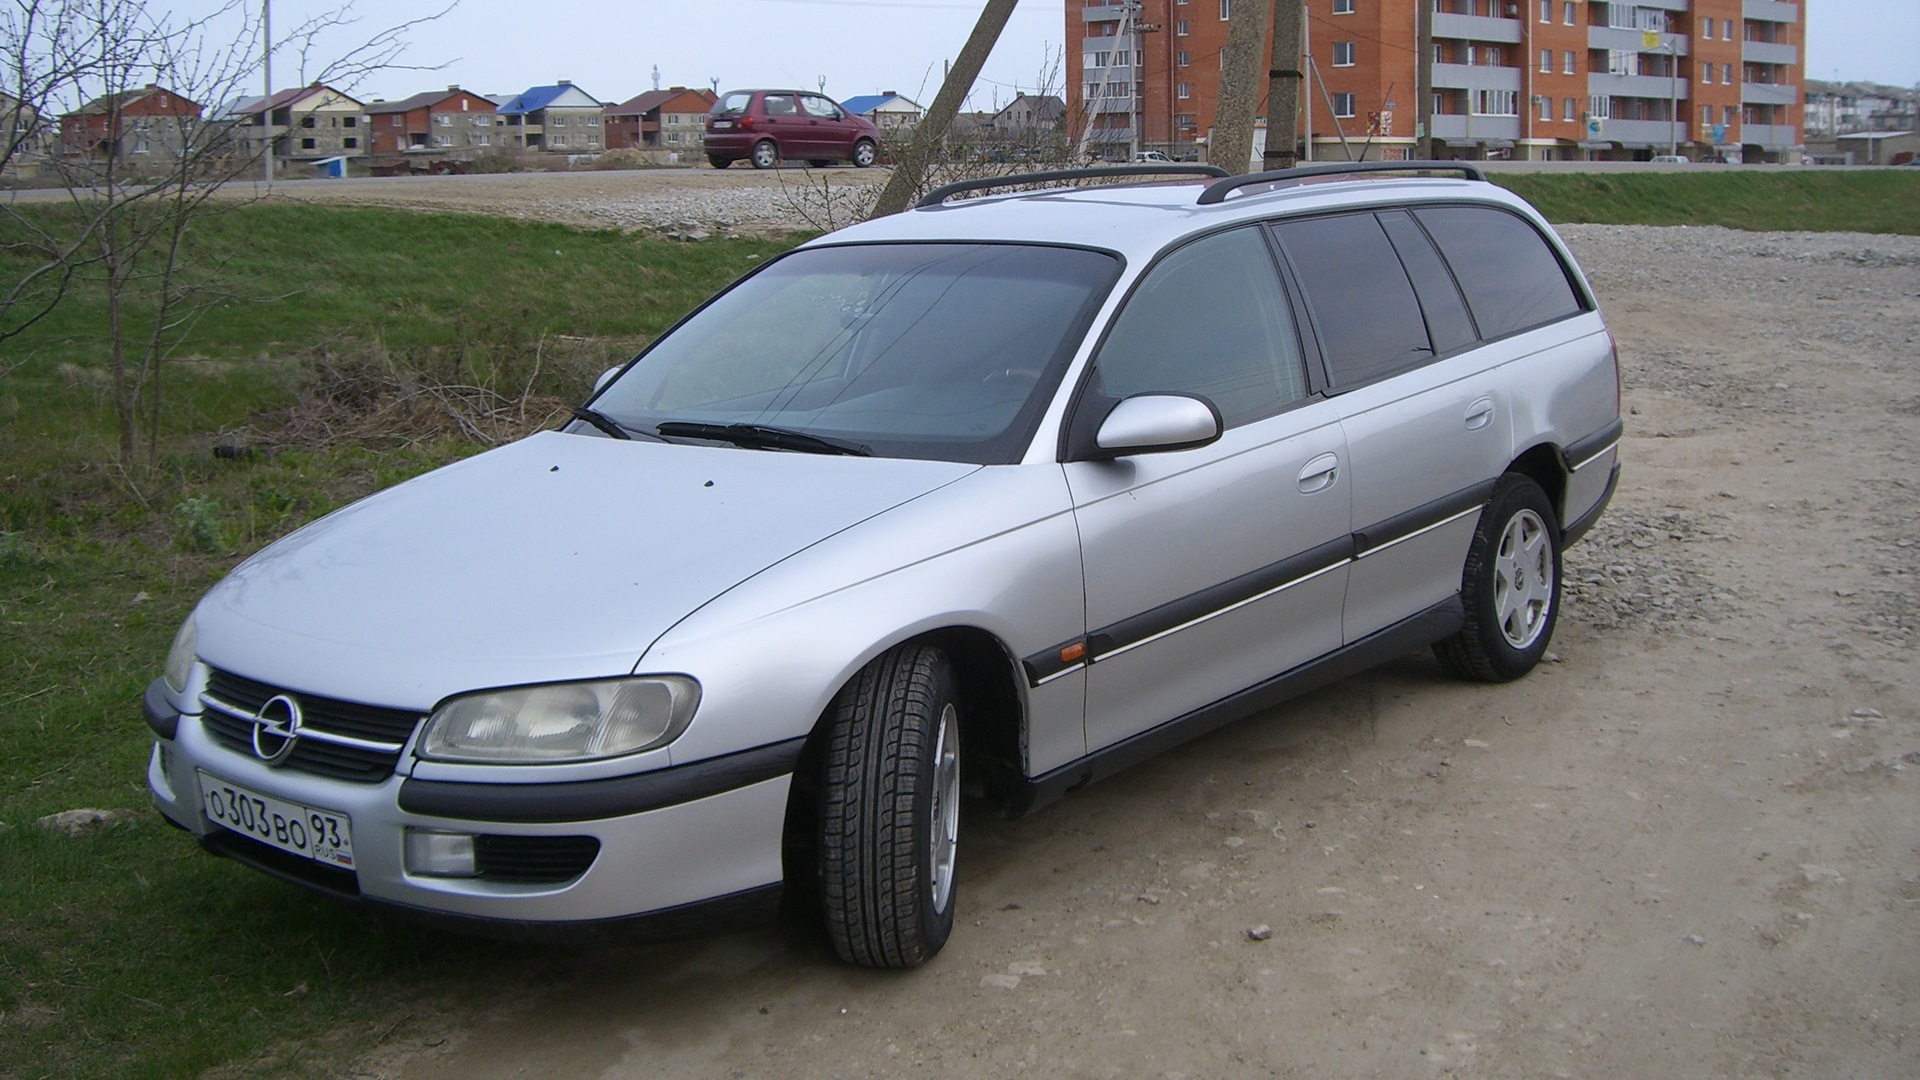 Opel Omega 1997 универсал. Опель Омега 2000 универсал. Опель Омега b 1997 универсал. Opel Omega универсал 2000.